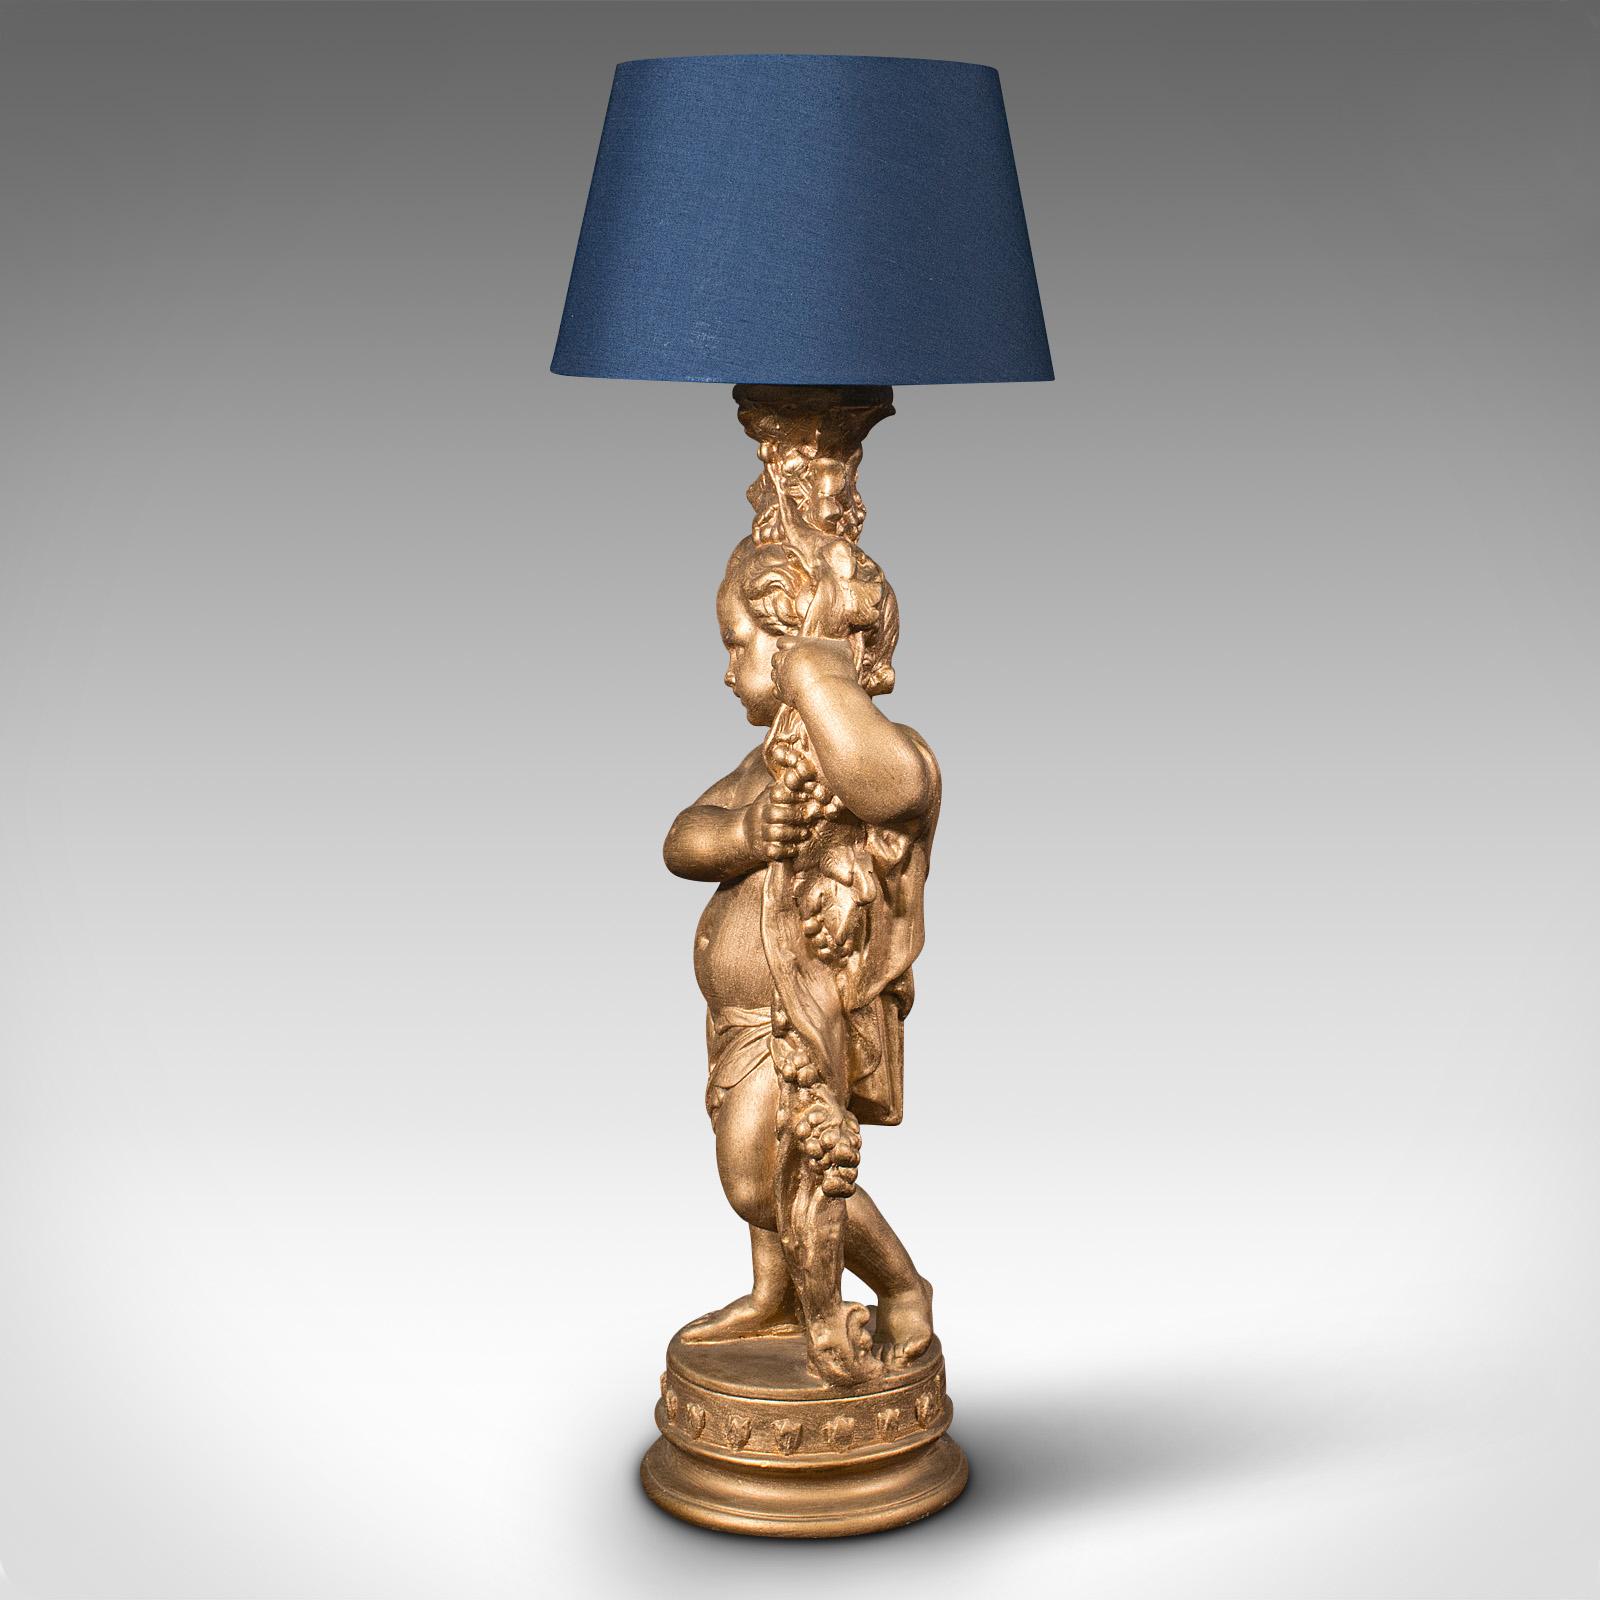 British Vintage Ornamental Putto Lamp, English, Decorative Cherub, Light, Desk, Table